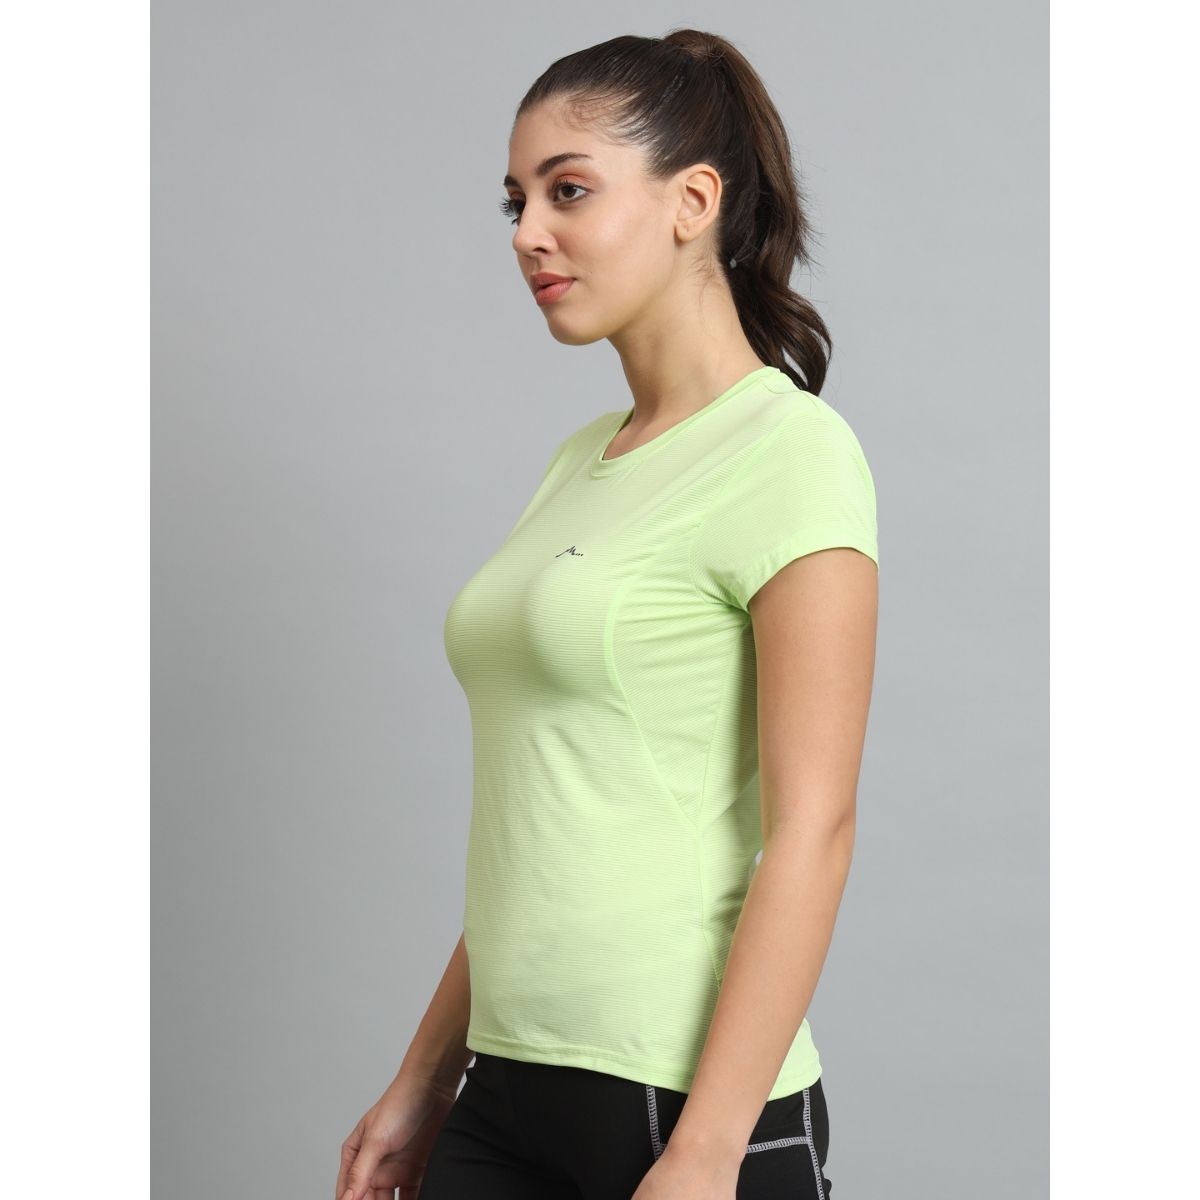 Women's Ultralight Athletic Half Sleeves T-Shirt - Lime 6